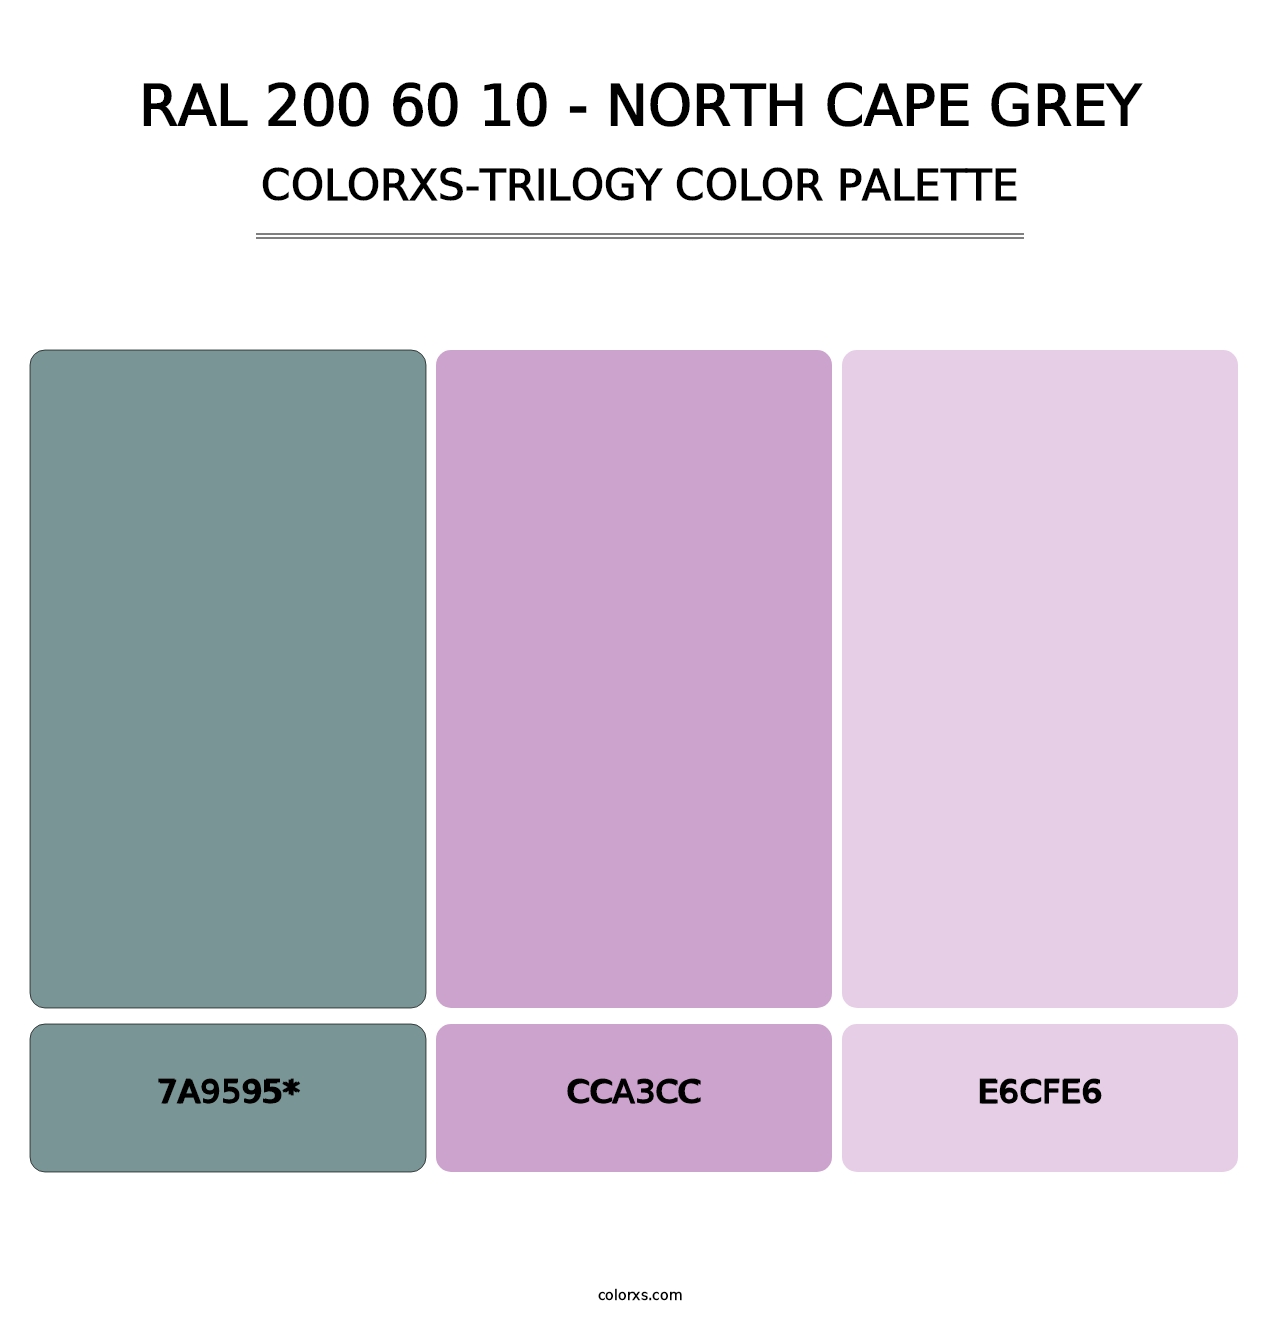 RAL 200 60 10 - North Cape Grey - Colorxs Trilogy Palette